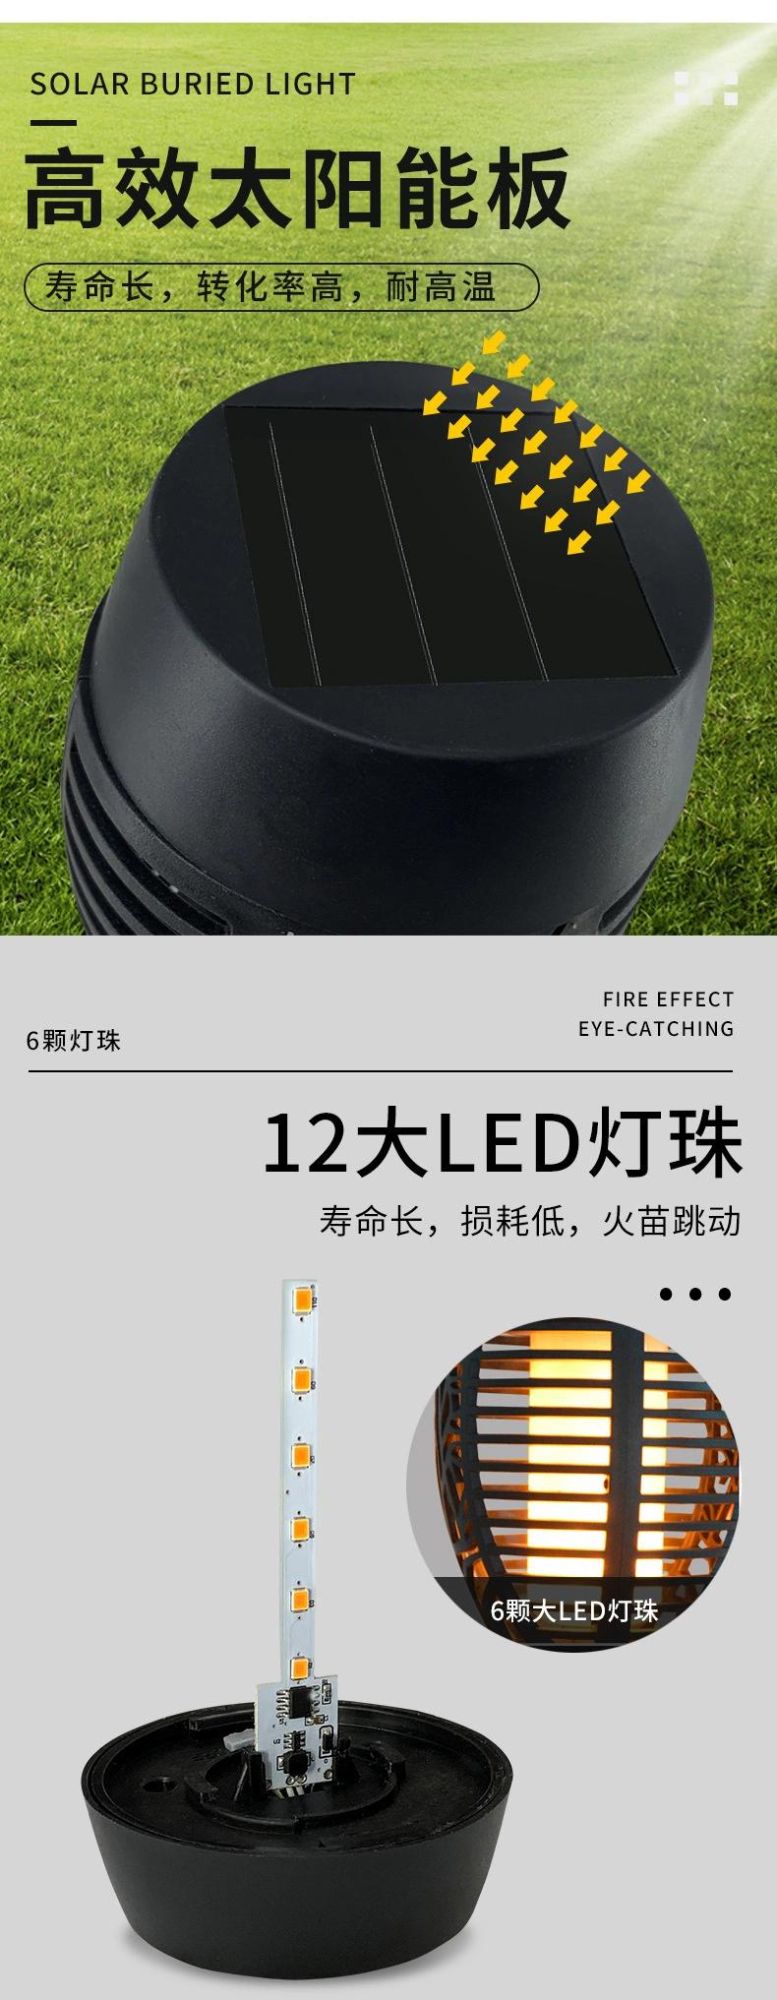 12 LED Solar Garden Light Outdoor Solar Light Waterproof Flickering Flame Torches Lawn Lamp